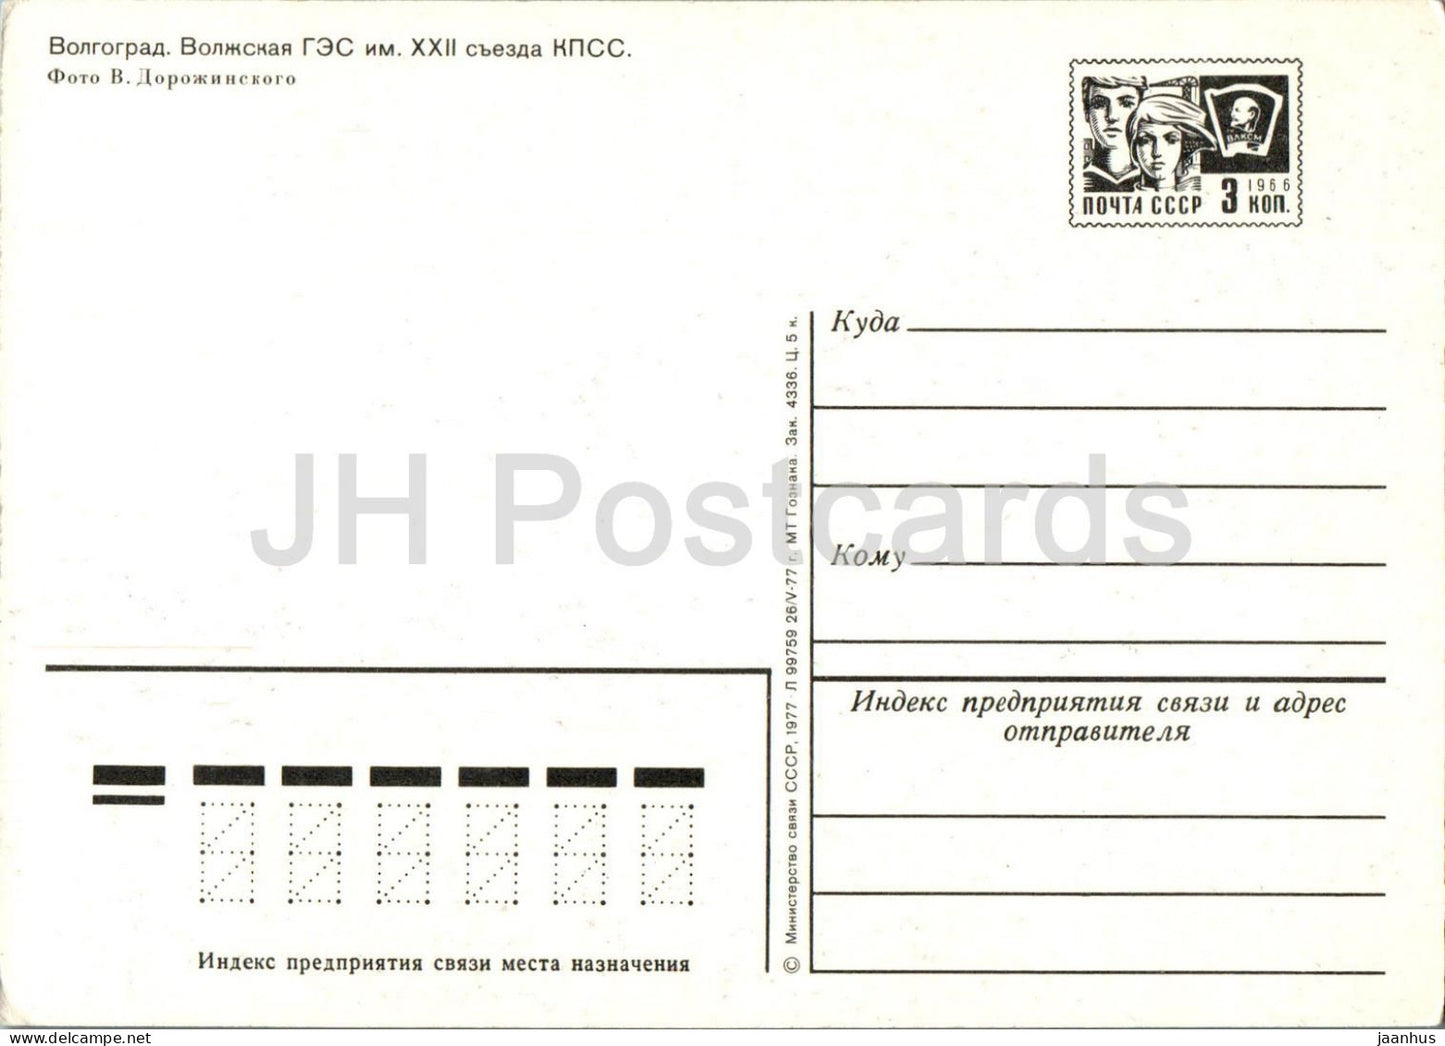 Volgograd - Volzhskaya HPP - Centrale hydroélectrique de la Volga - entier postal - 1977 - Russie URSS - inutilisé 